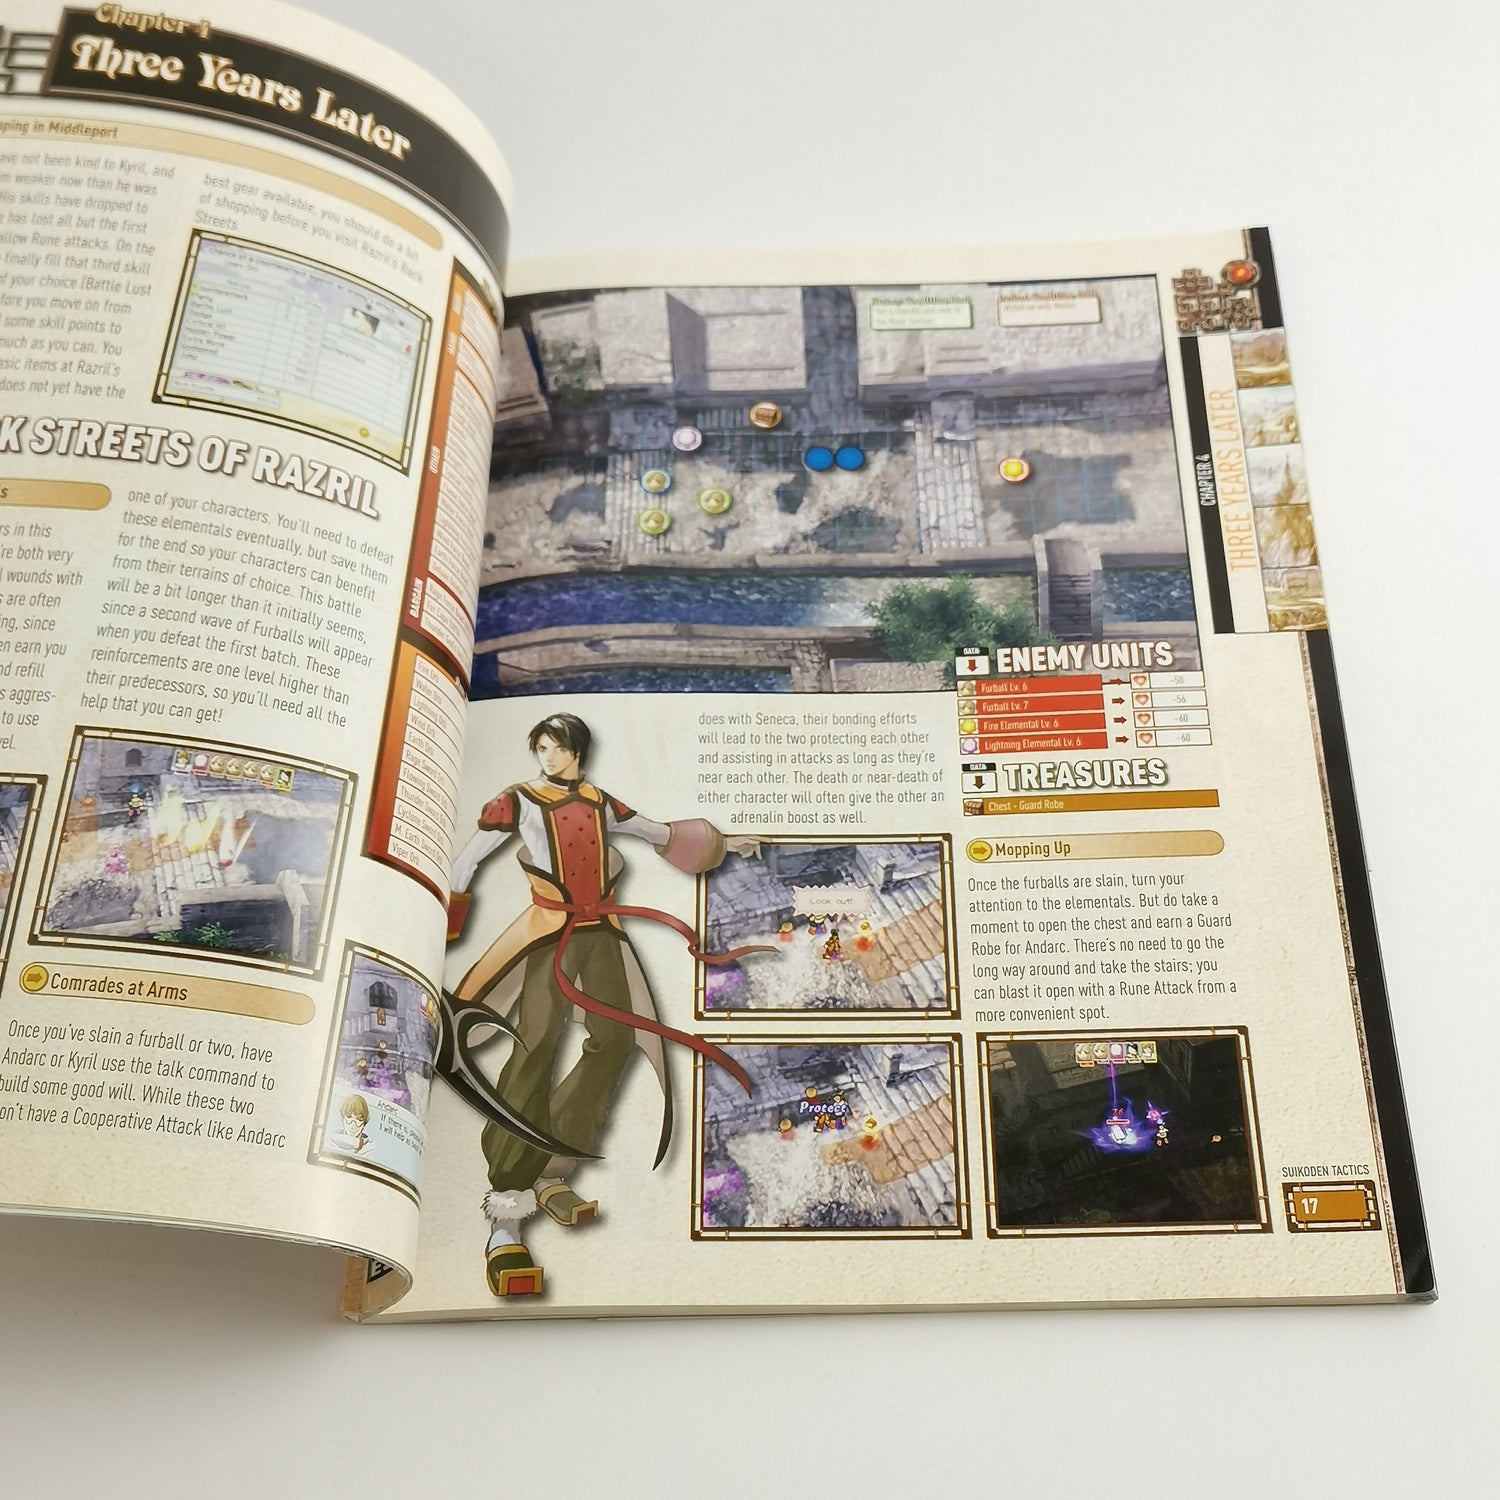 Sony Playstation 2 Spiel : Suikoden Tactics + Lösungsbuch / Stragey Guide | PS2